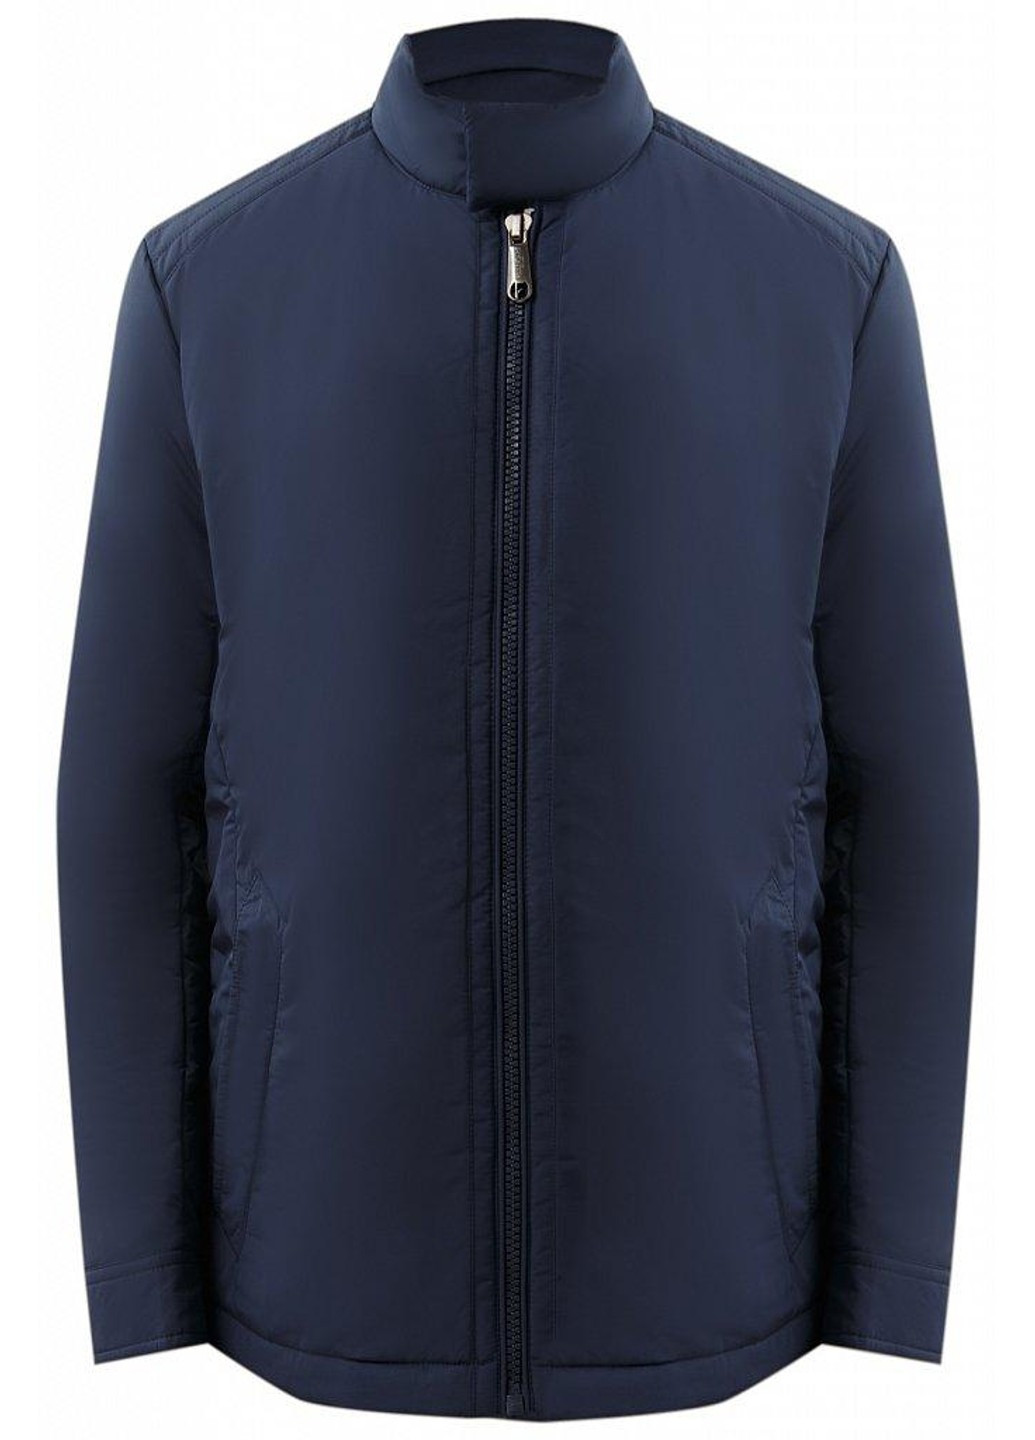 Темно-синяя демисезонная куртка a19-21033-101 Finn Flare